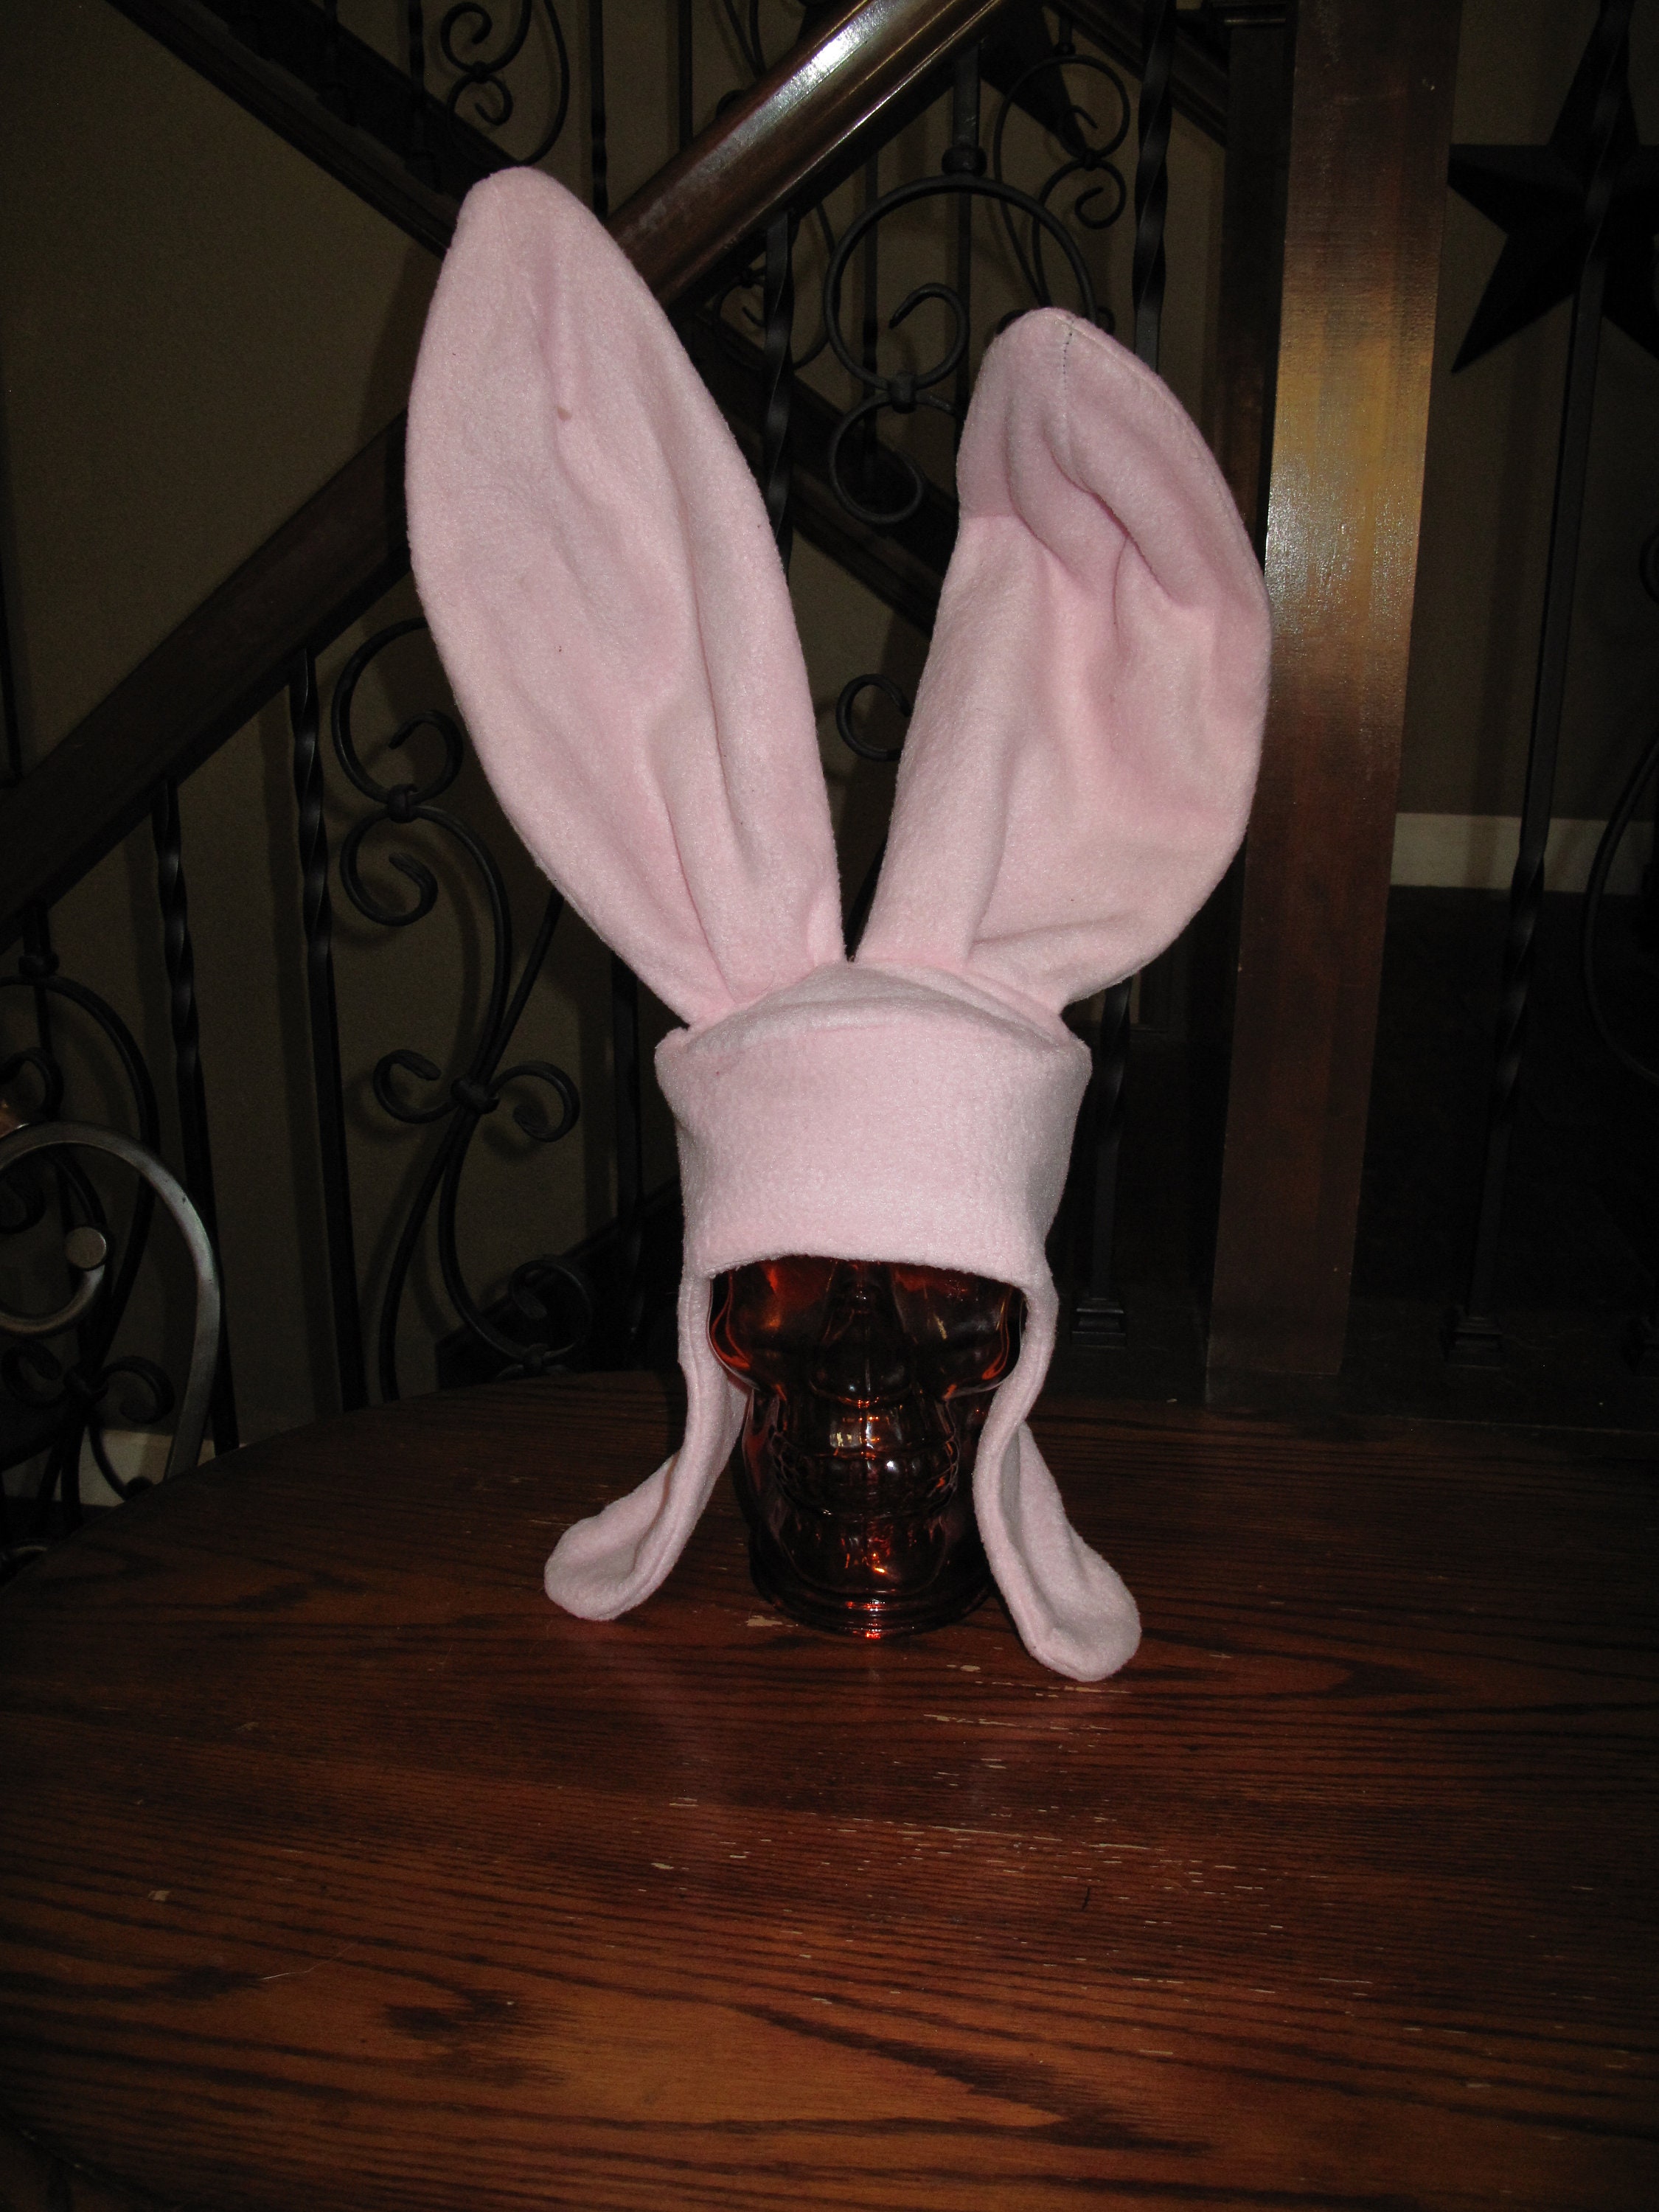  bacxigo Cosplay Pink Bunny Ears Hat (Adult Size